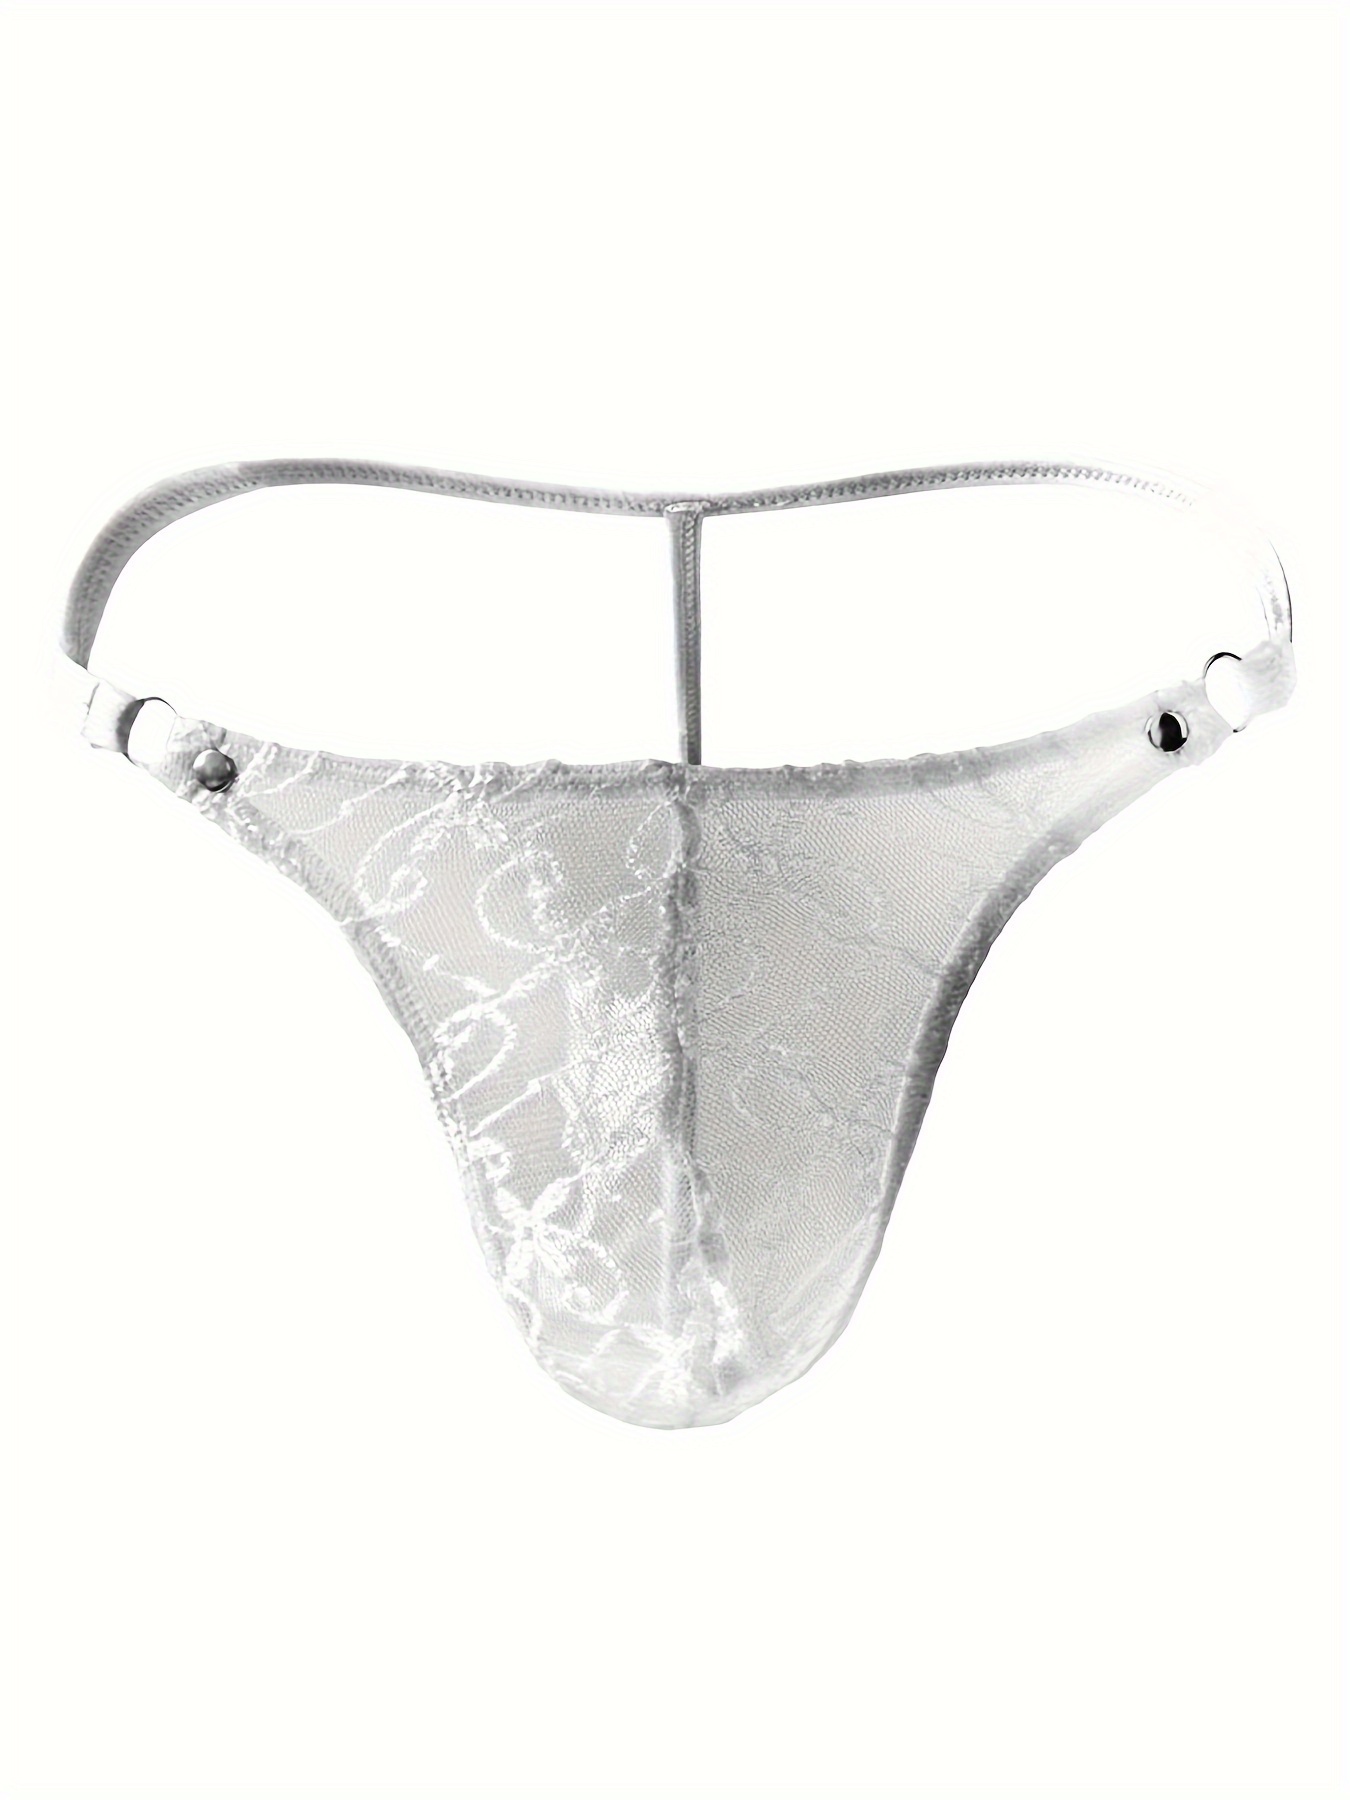 Briefs T-back G-string V-string Thong Underwear See-through Pouch Mesh Low  Waist